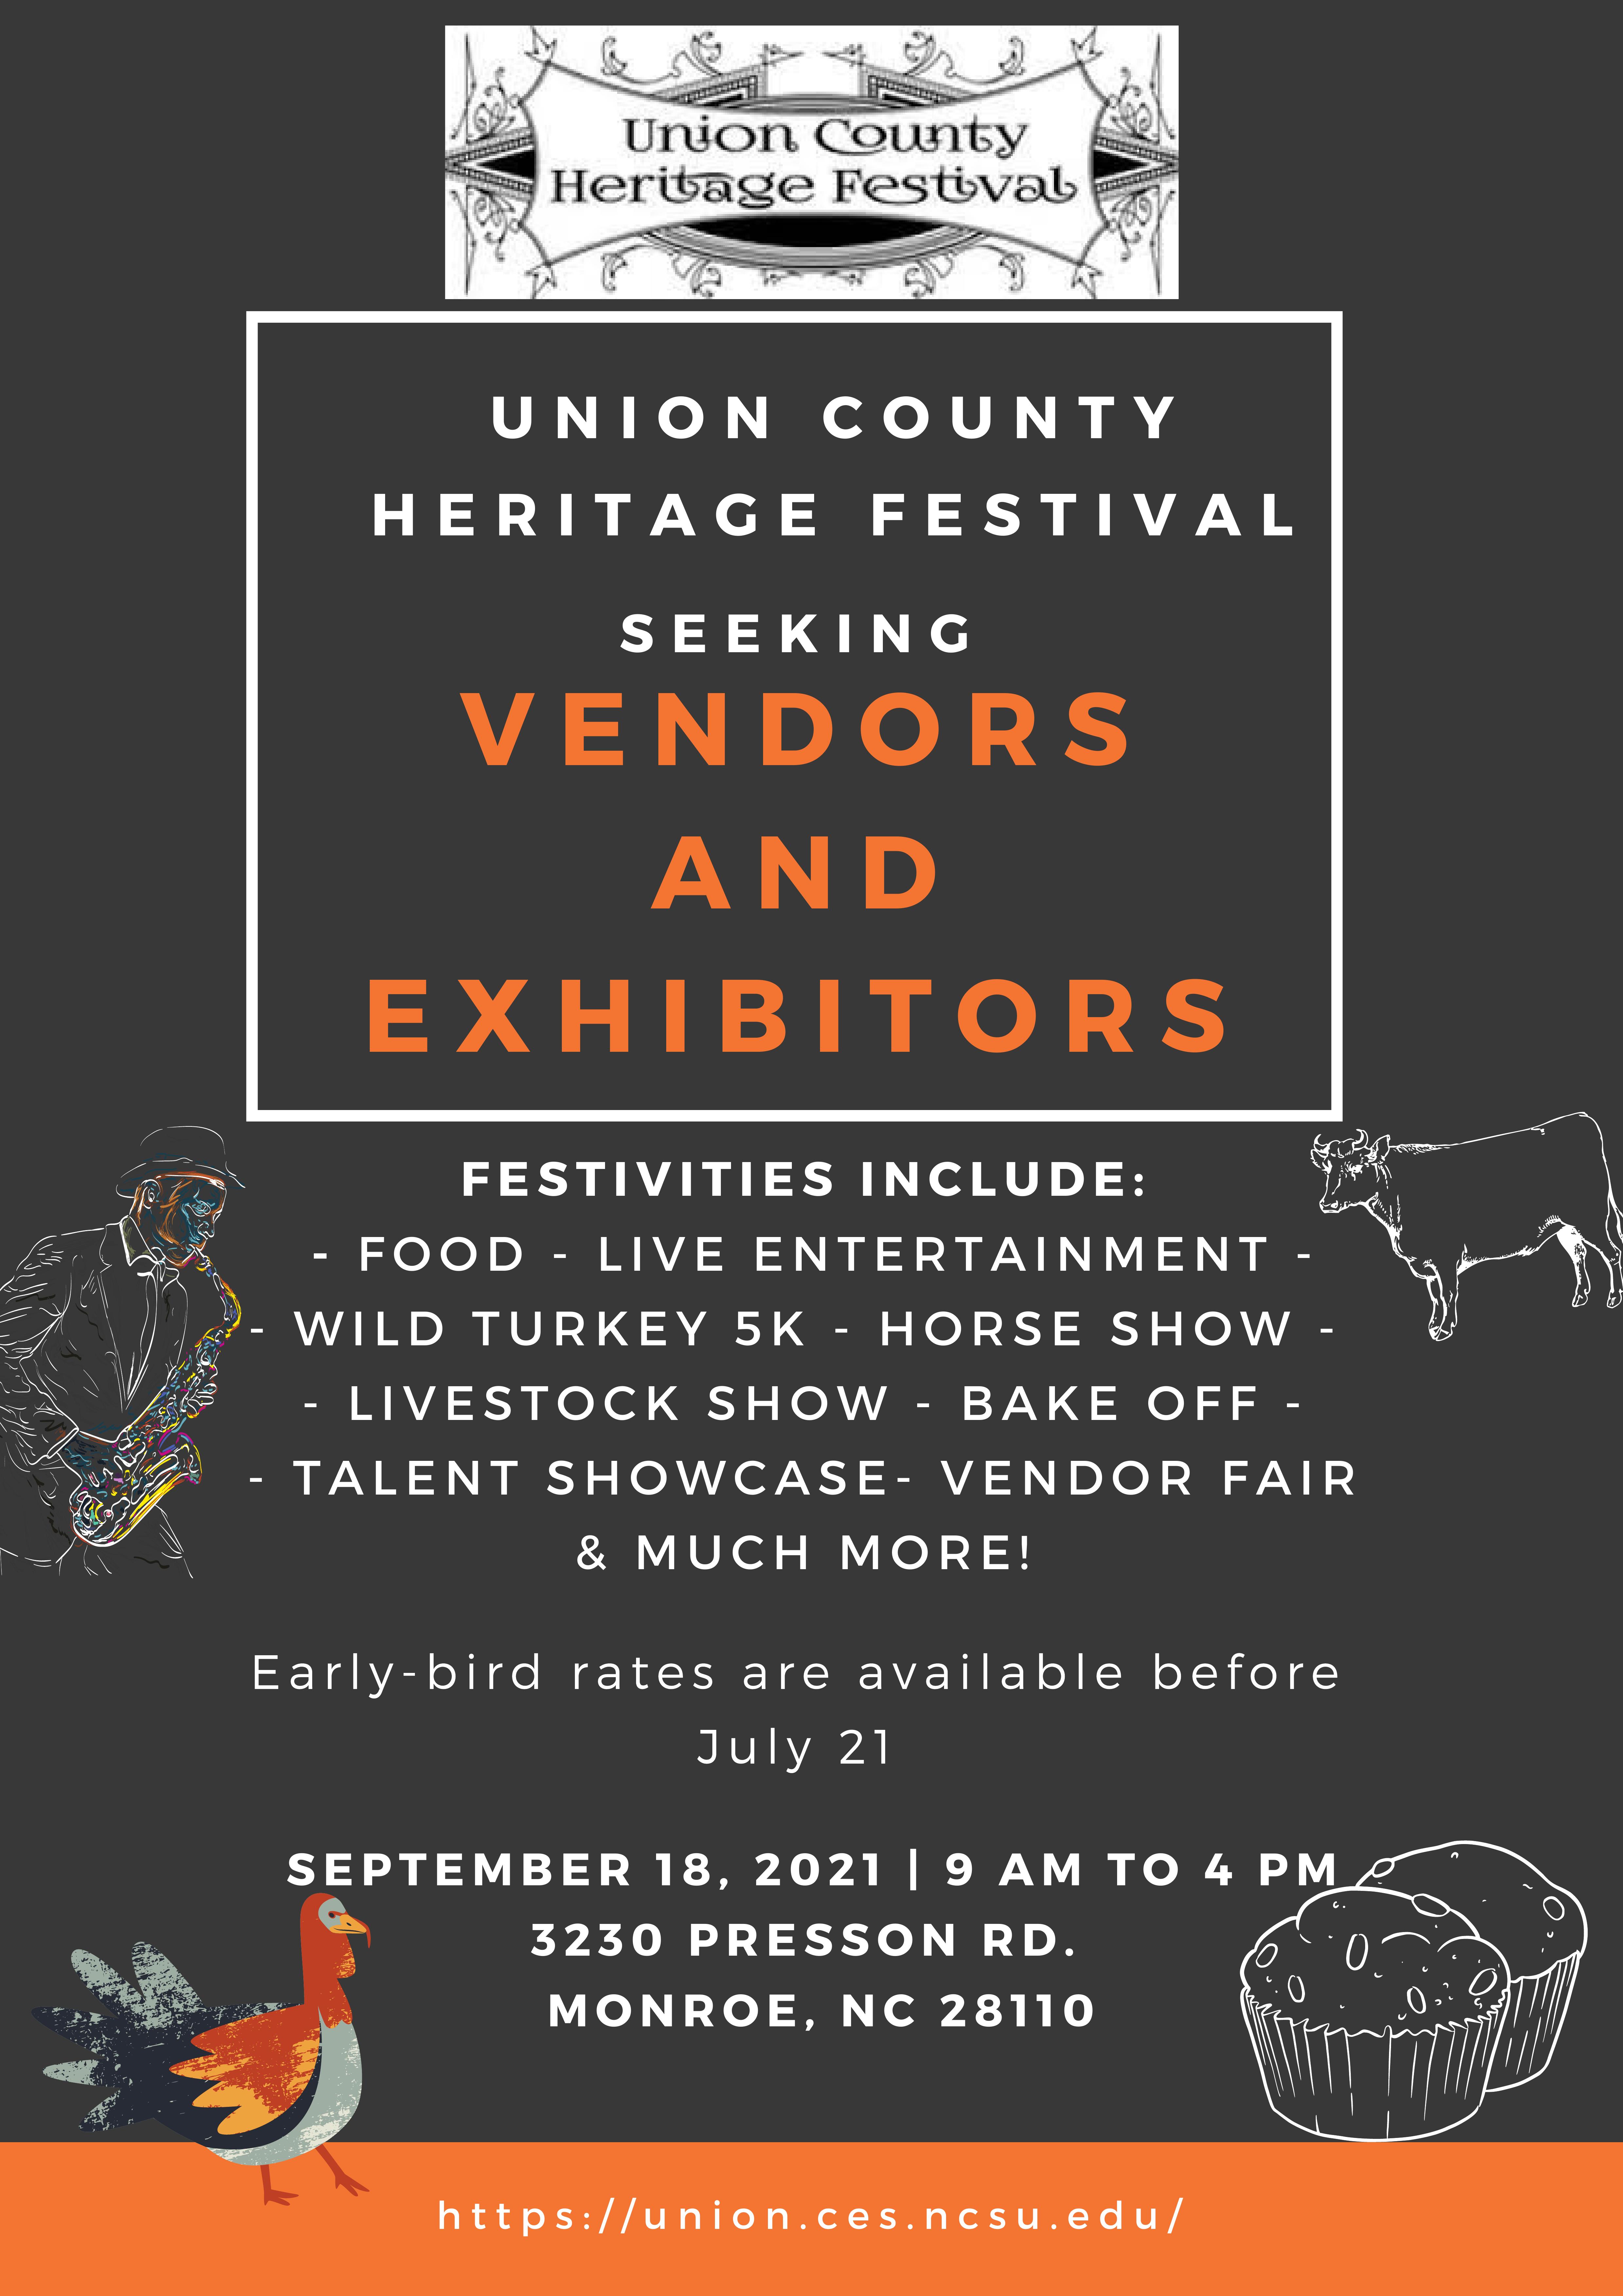 Union County Heritage Festival